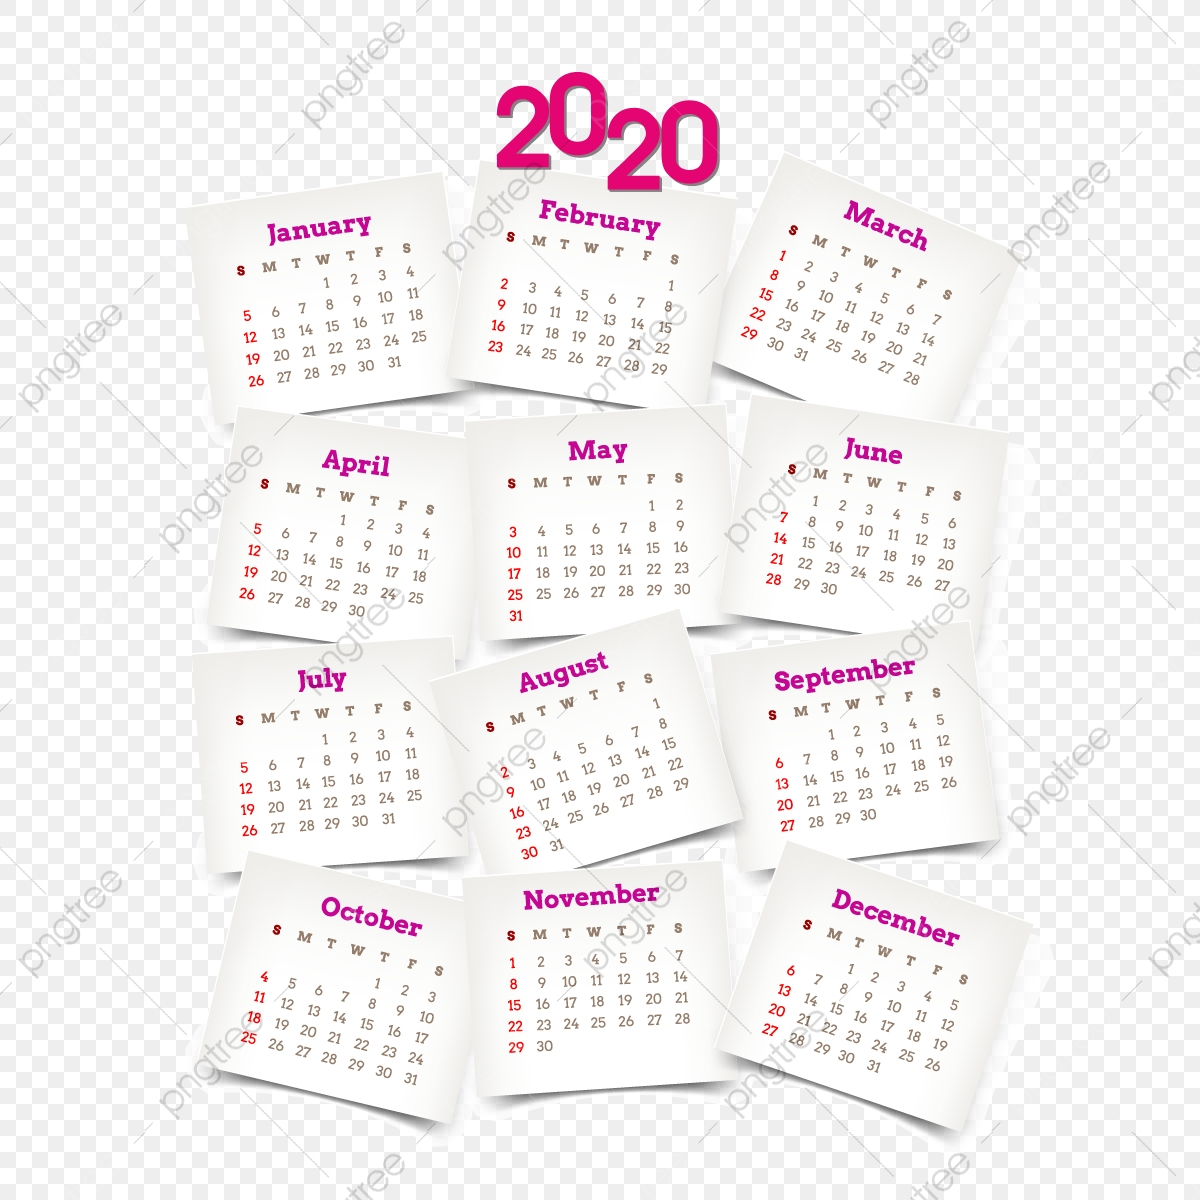 Yearly Pink Calendar 2020 2020 Calendar, Calendar 2020